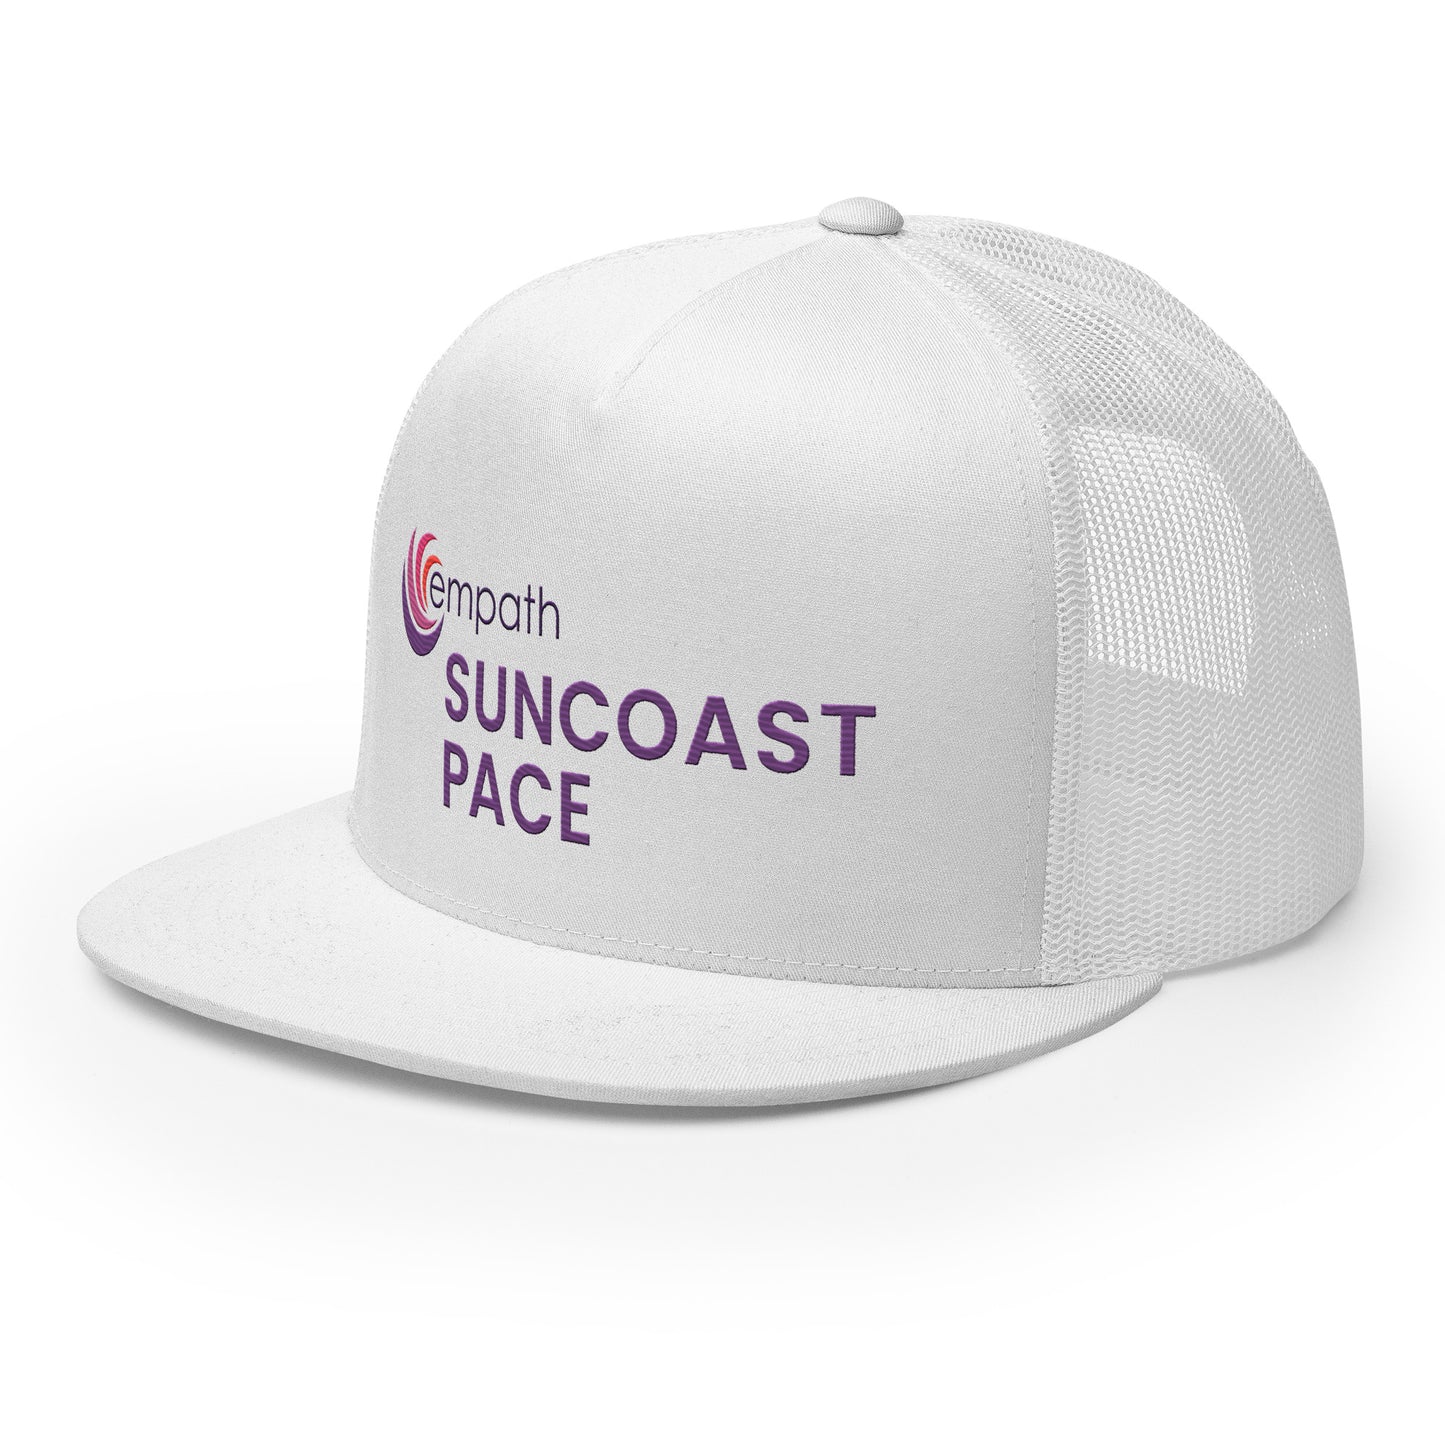 Trucker Cap - Suncoast PACE